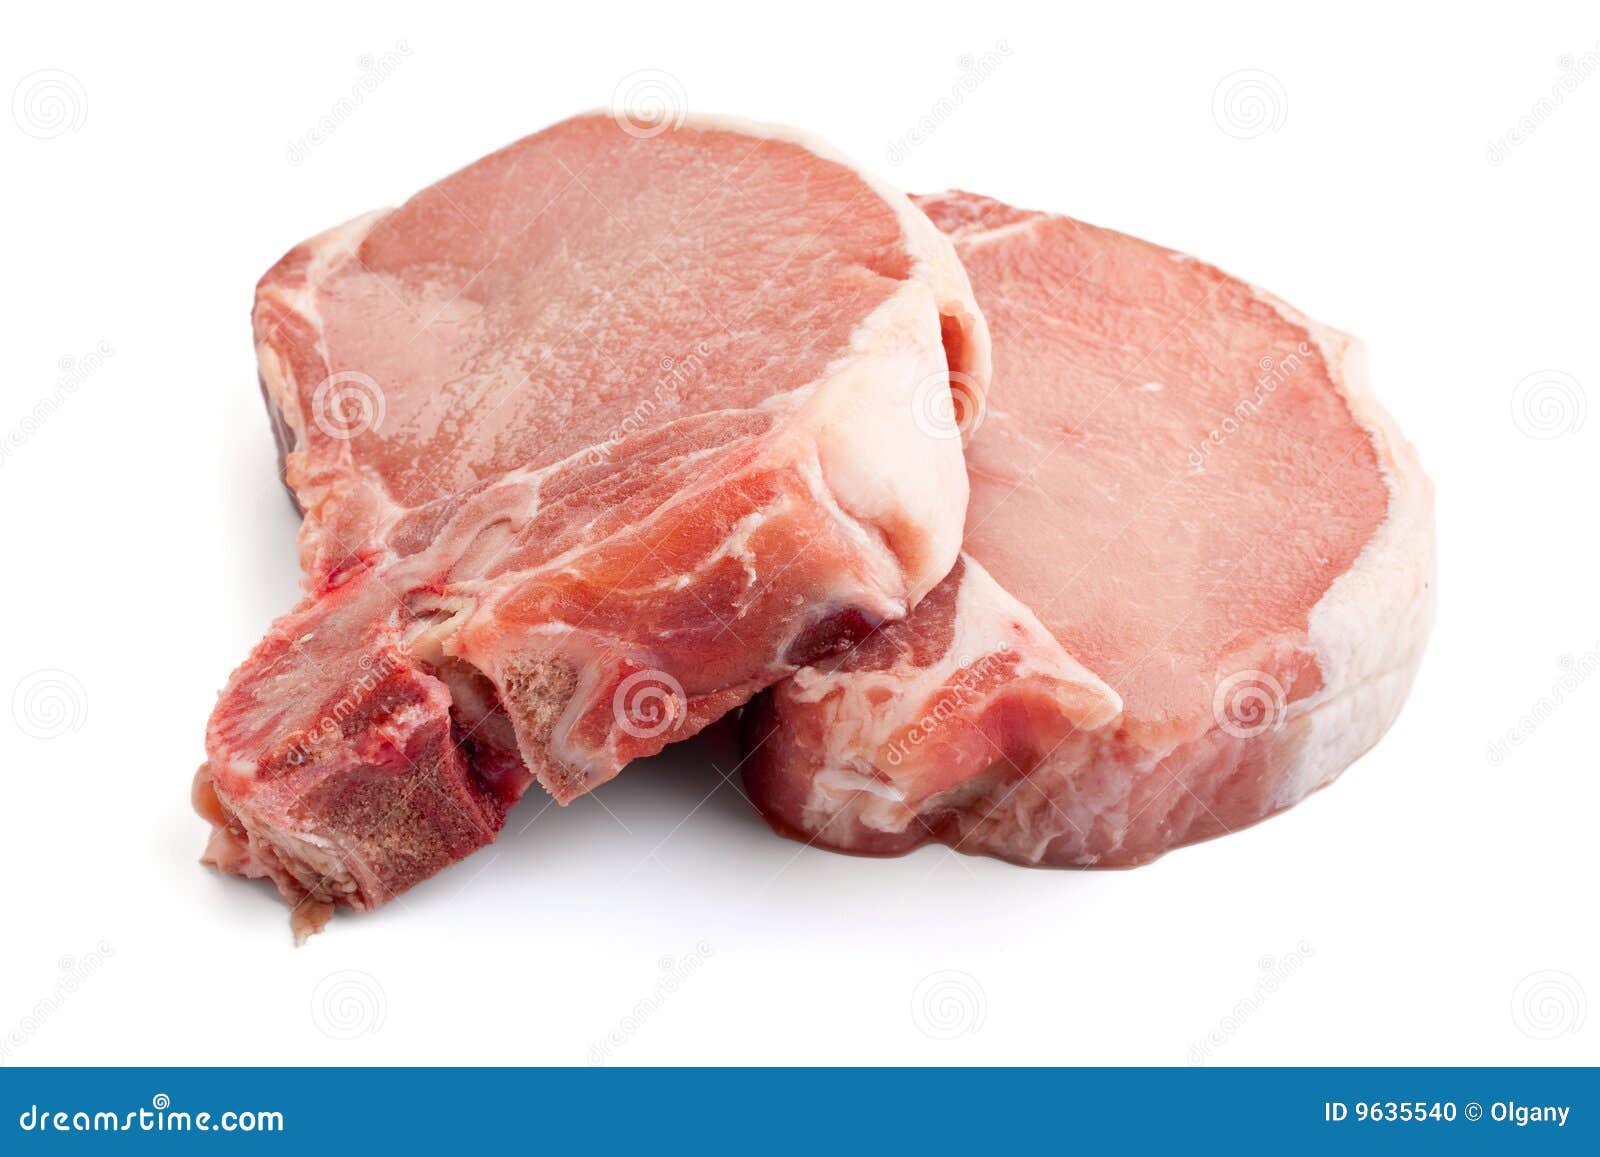 raw-pork-chops-white-background-9635540.jpg